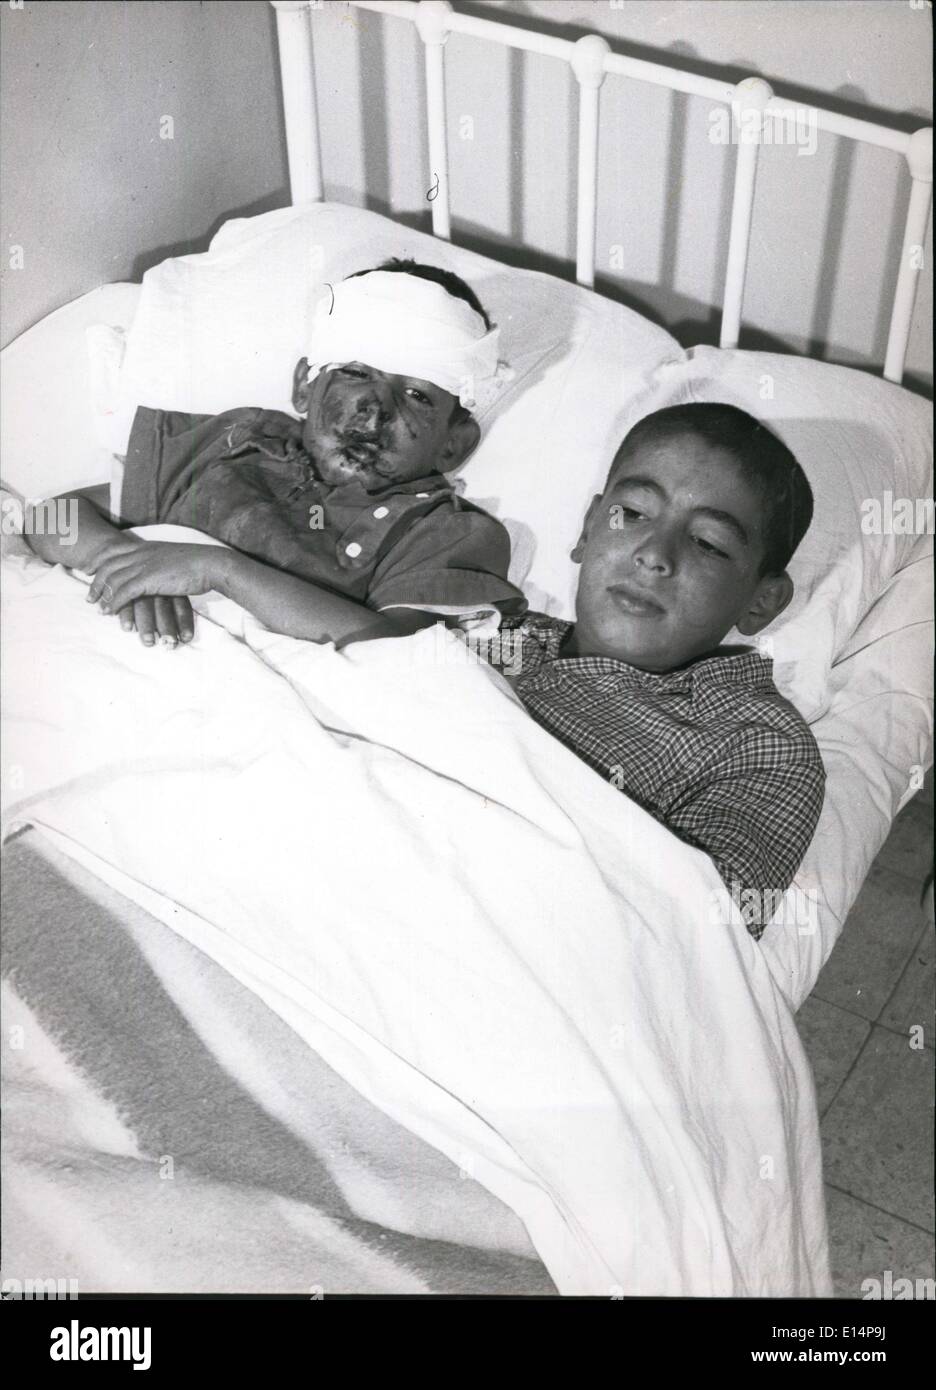 12 avril 2012 - garçons blessés récupérer in Hospital Bed Banque D'Images